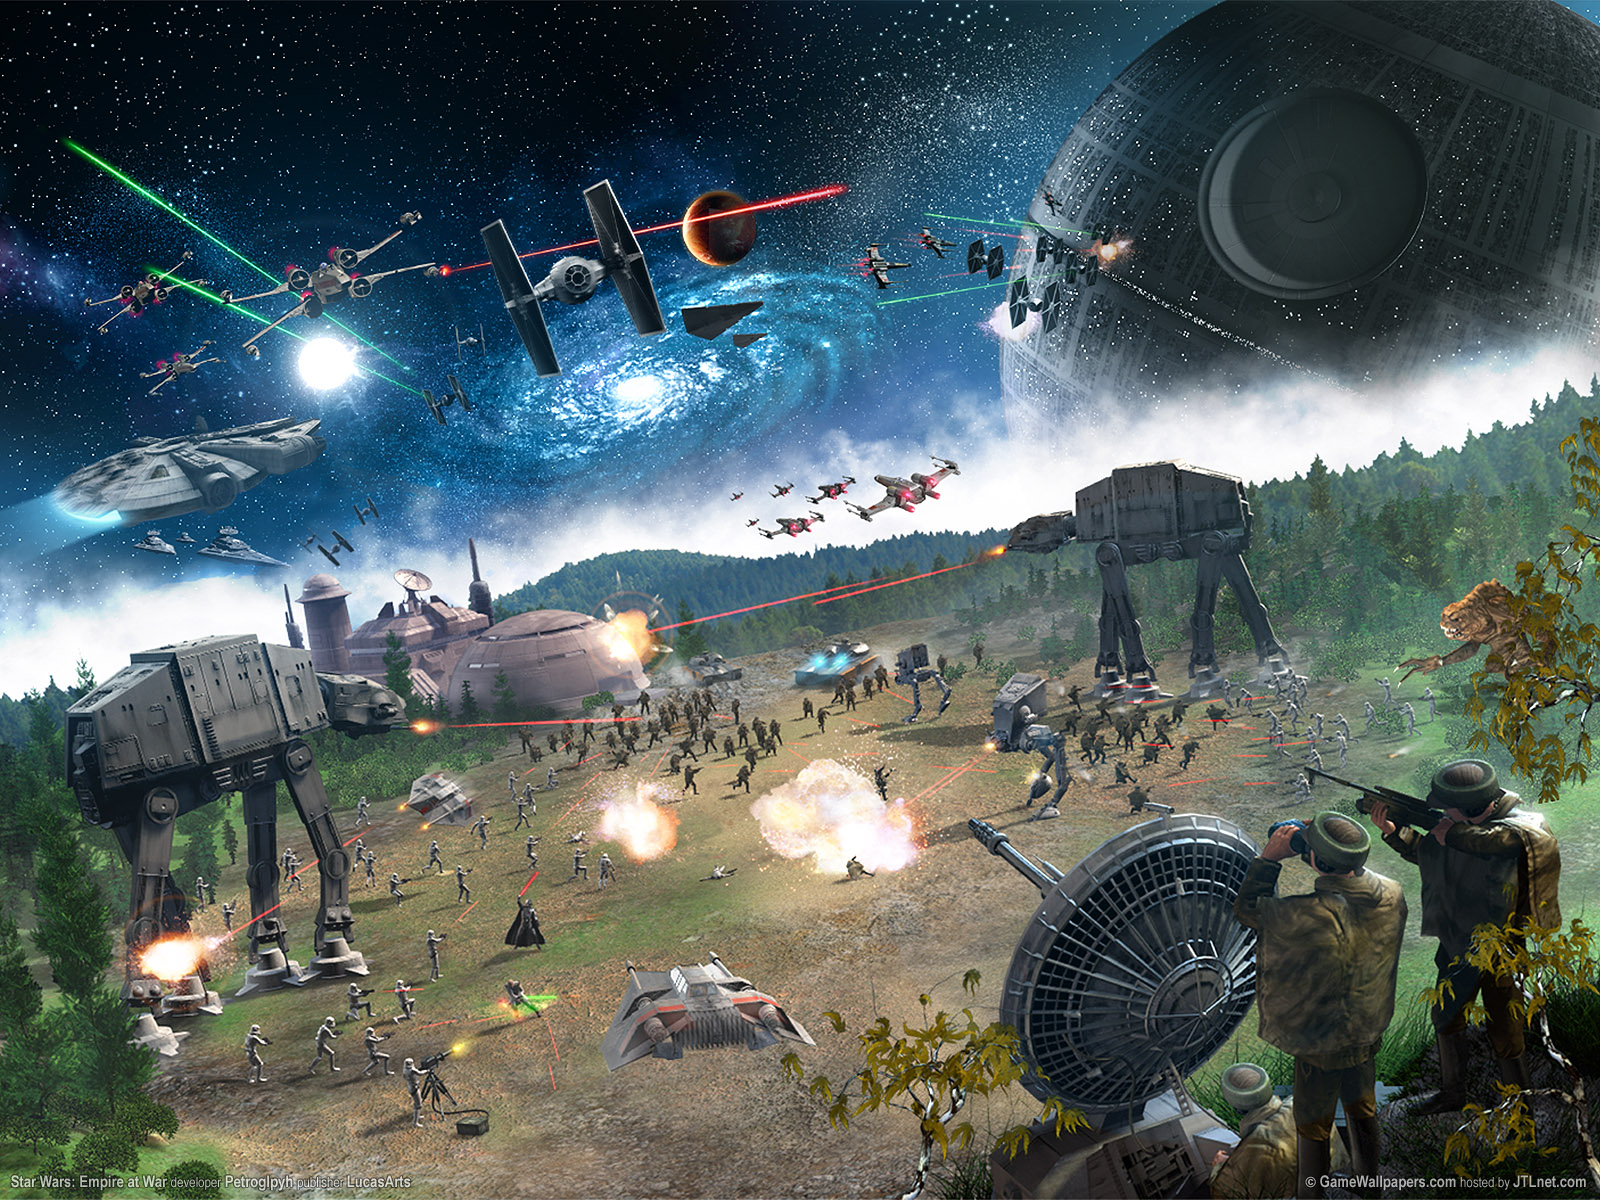 star wars: empire at war, video game, at at walker, battle, death star, millennium falcon, sci fi, star wars, tie fighter, x wing